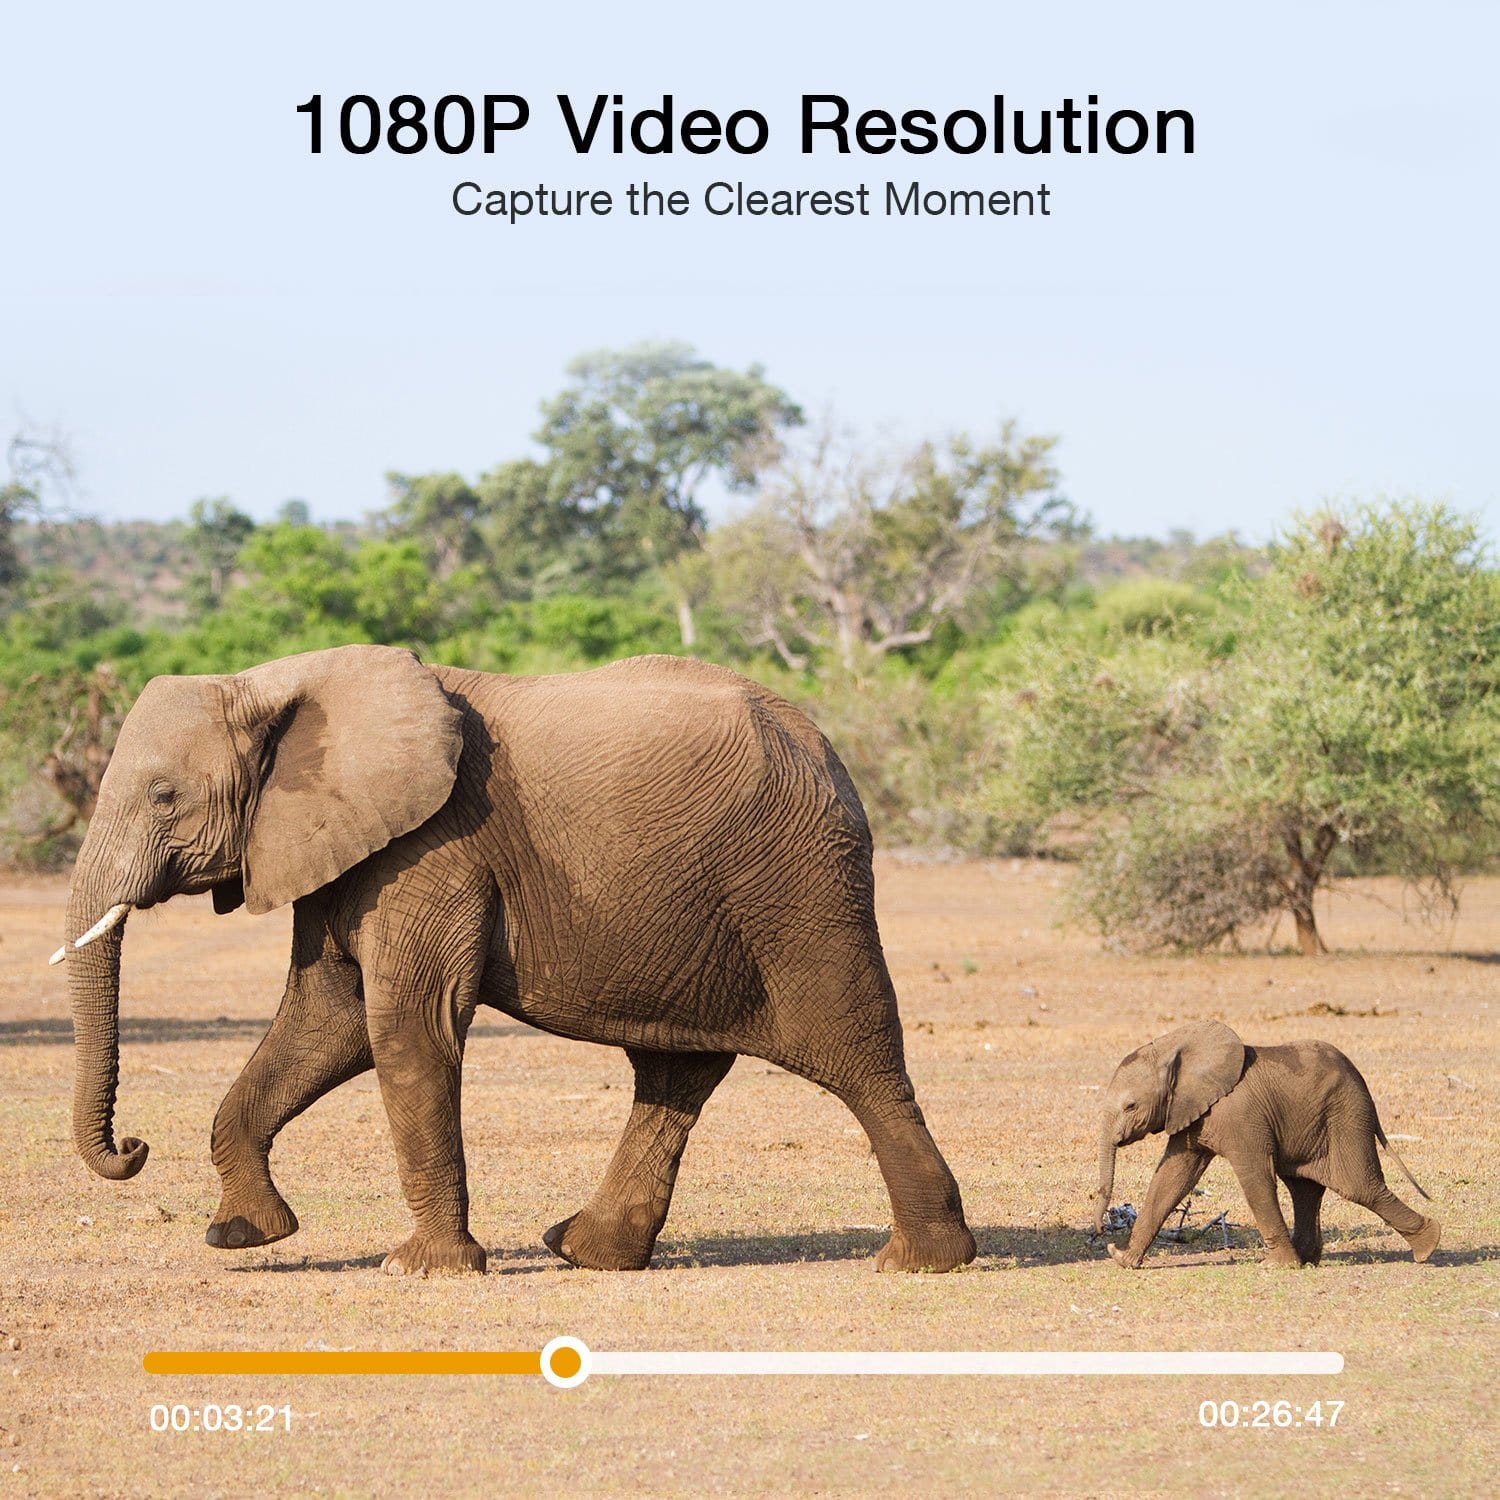 Campark T40-1 Trail Camera has 1080P video resolution 